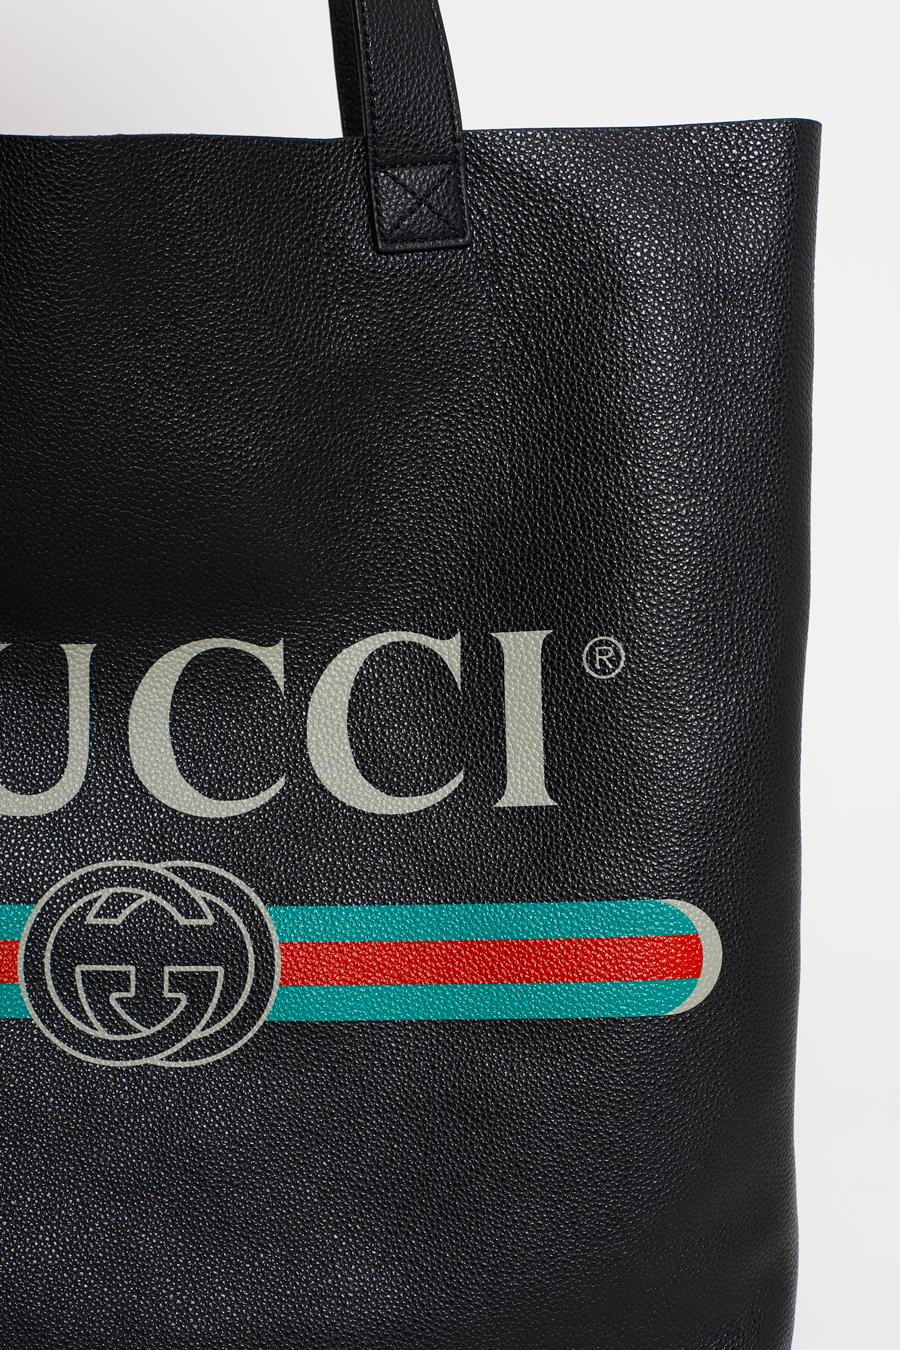 Gucci Logo Print Tote Bag in Black | Lyst